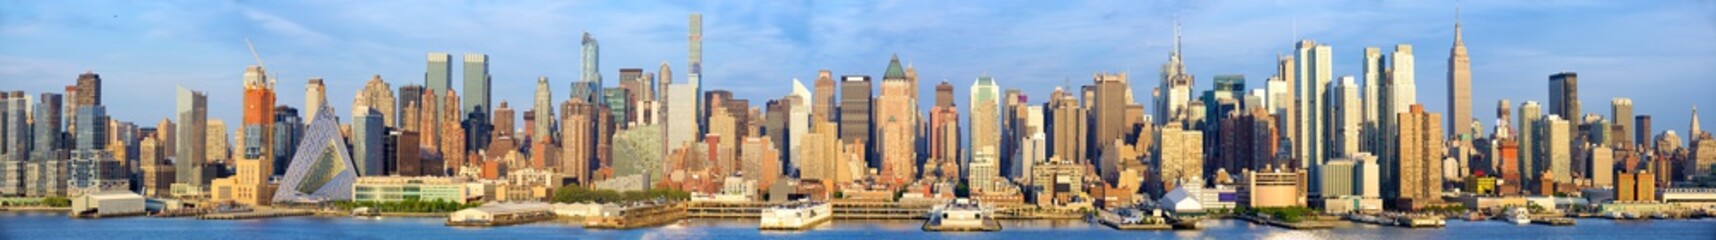 Manhattan Midtown skyline panorama, New York City